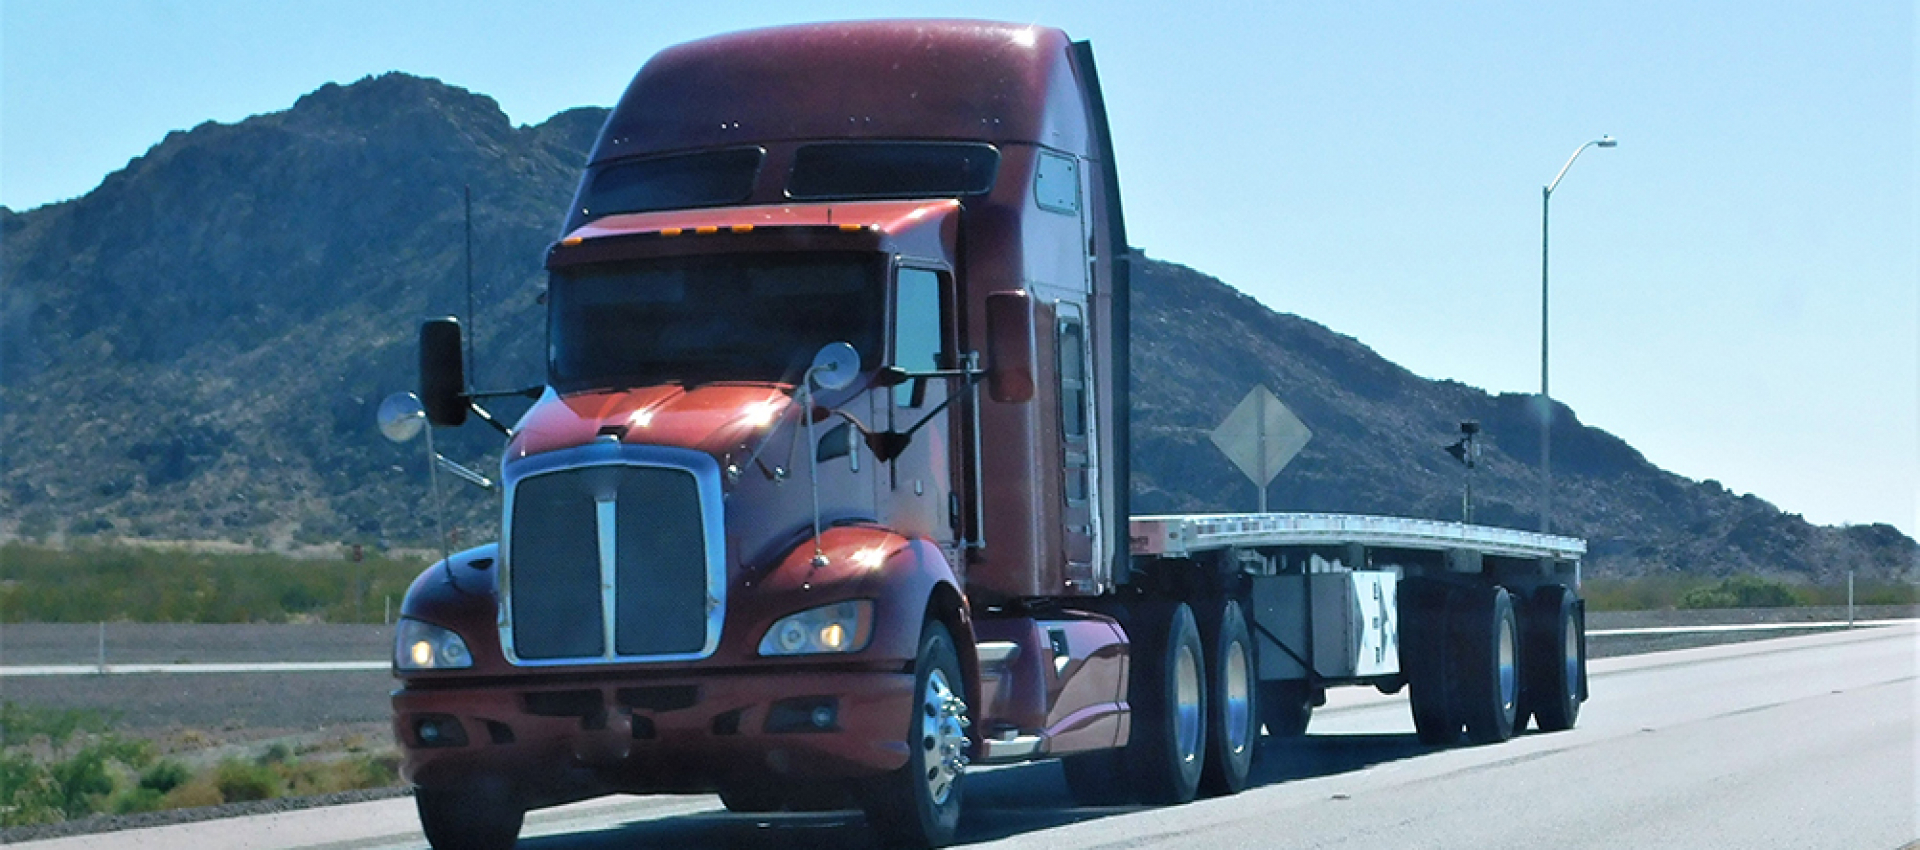 Choosing a Trucking Company as a Female Driver